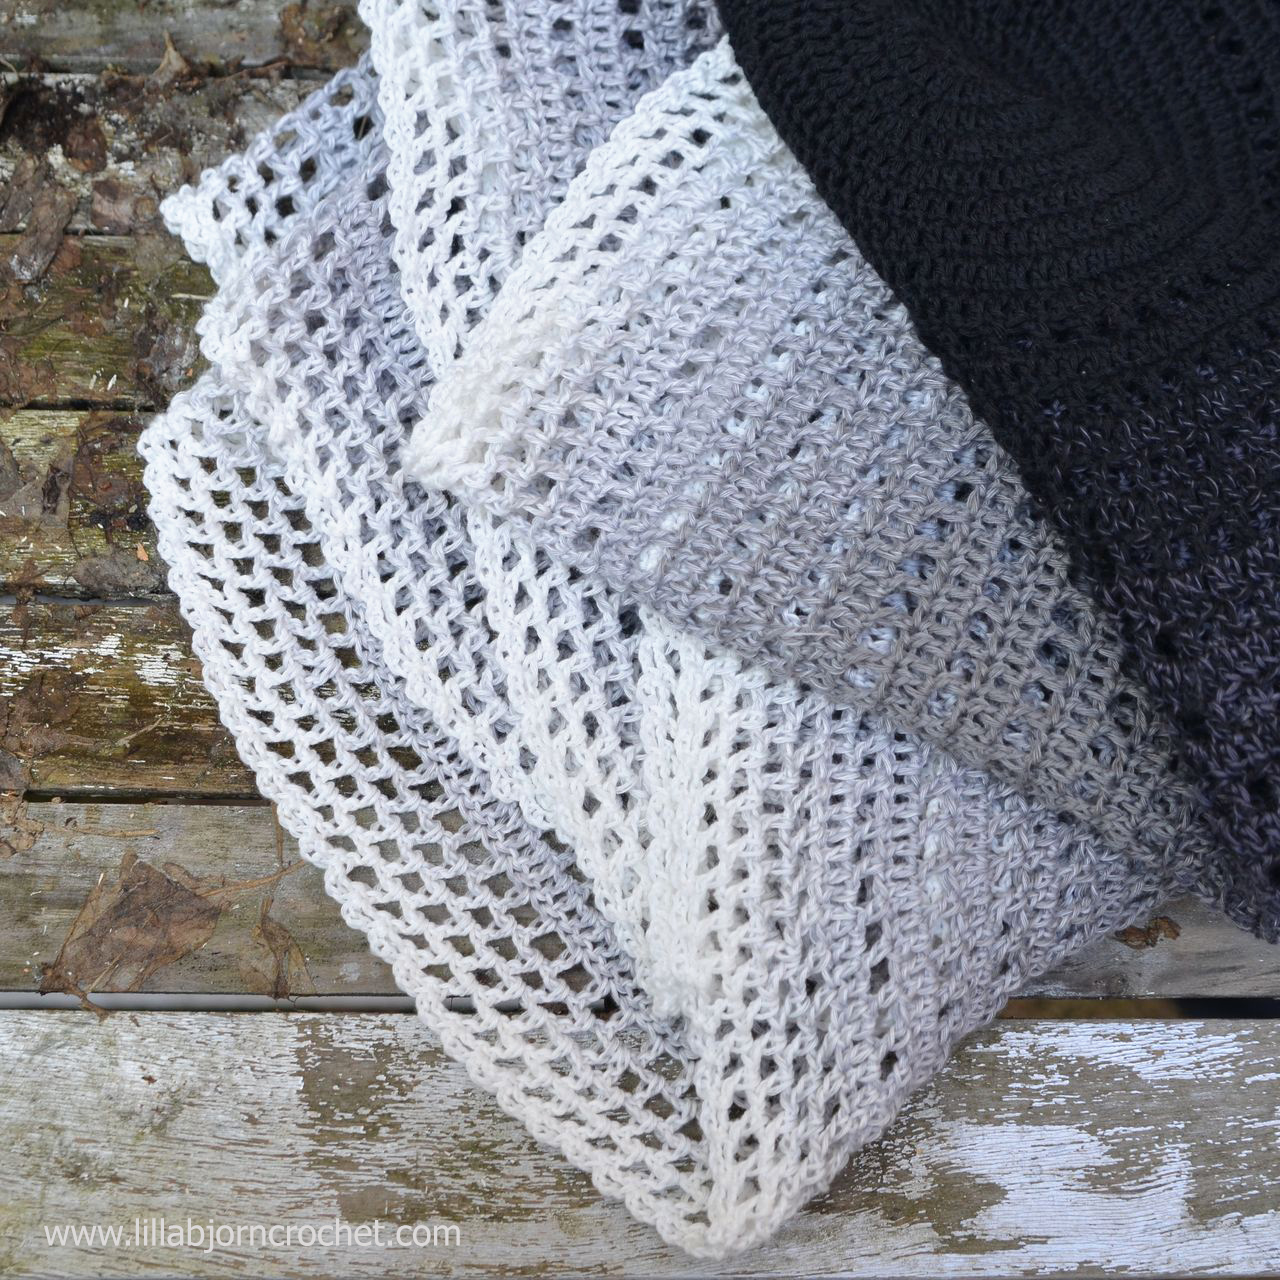 Crochet mandala vest - made with Whirl yarn by Scheepjes - original design by Lilla Bjorn